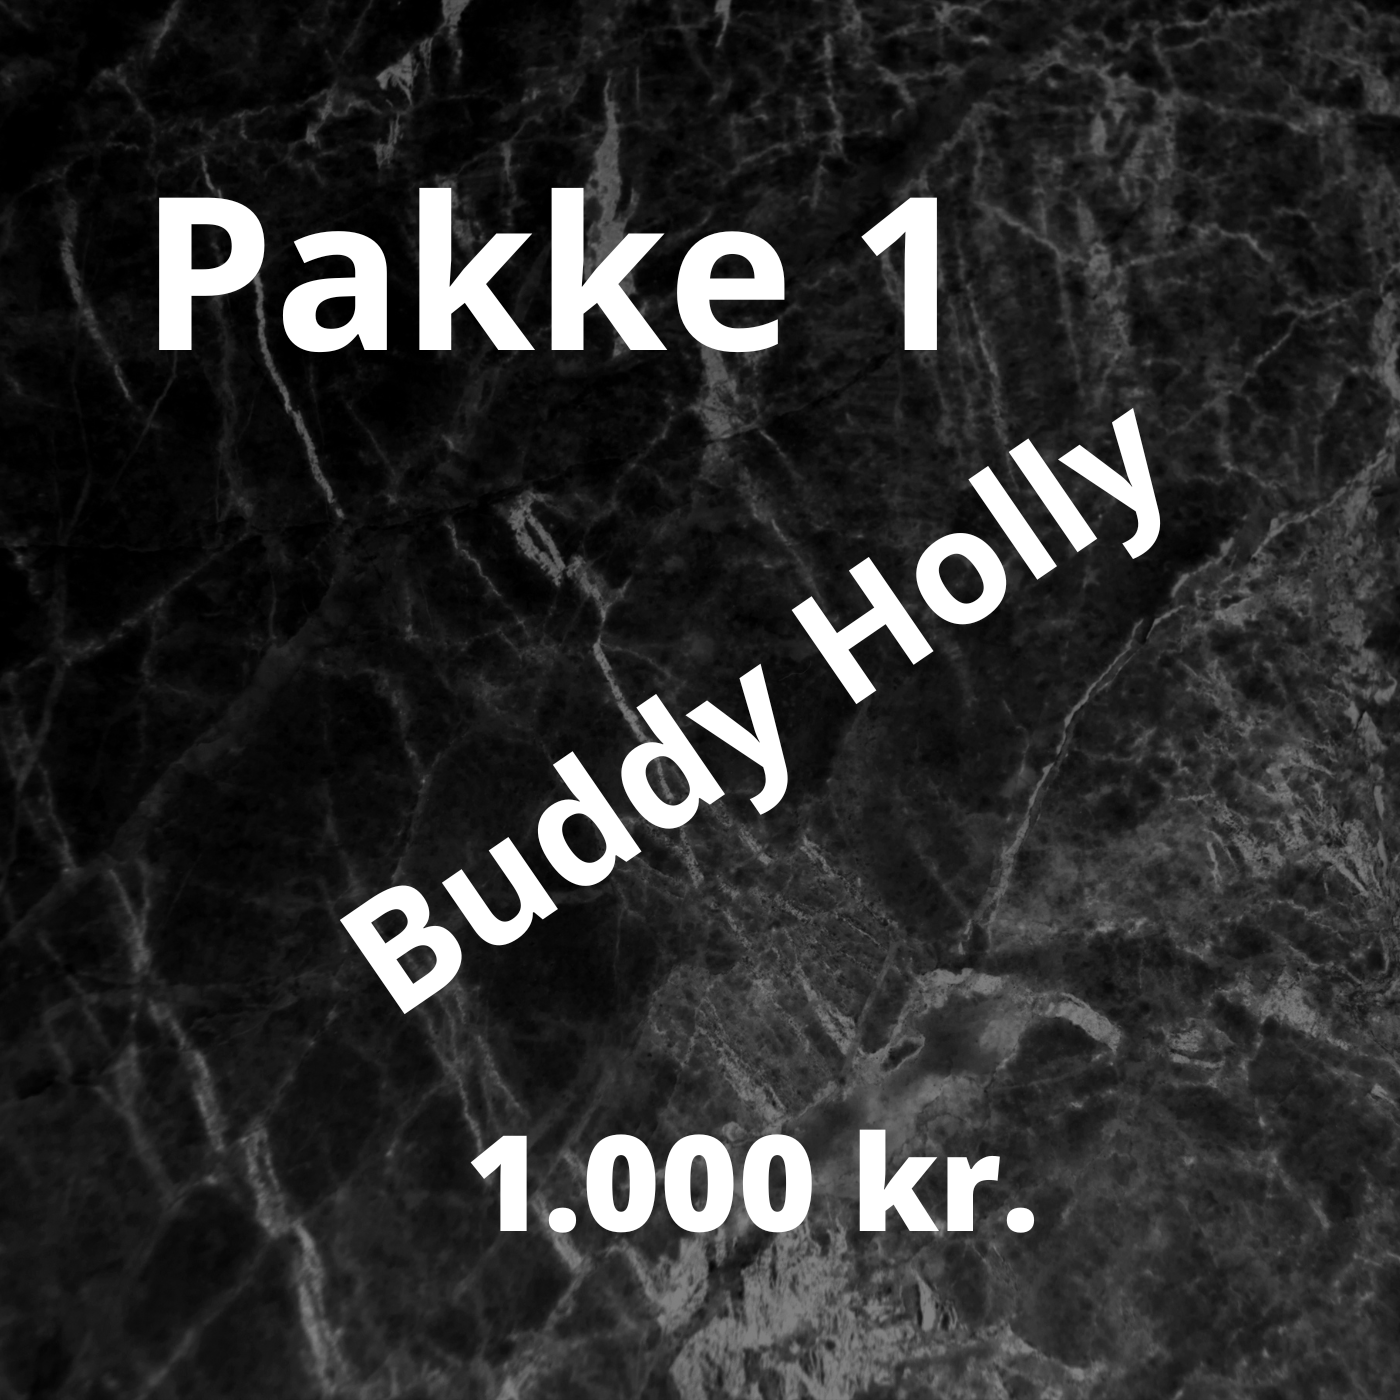 Pakke 1 - Buddy Holly